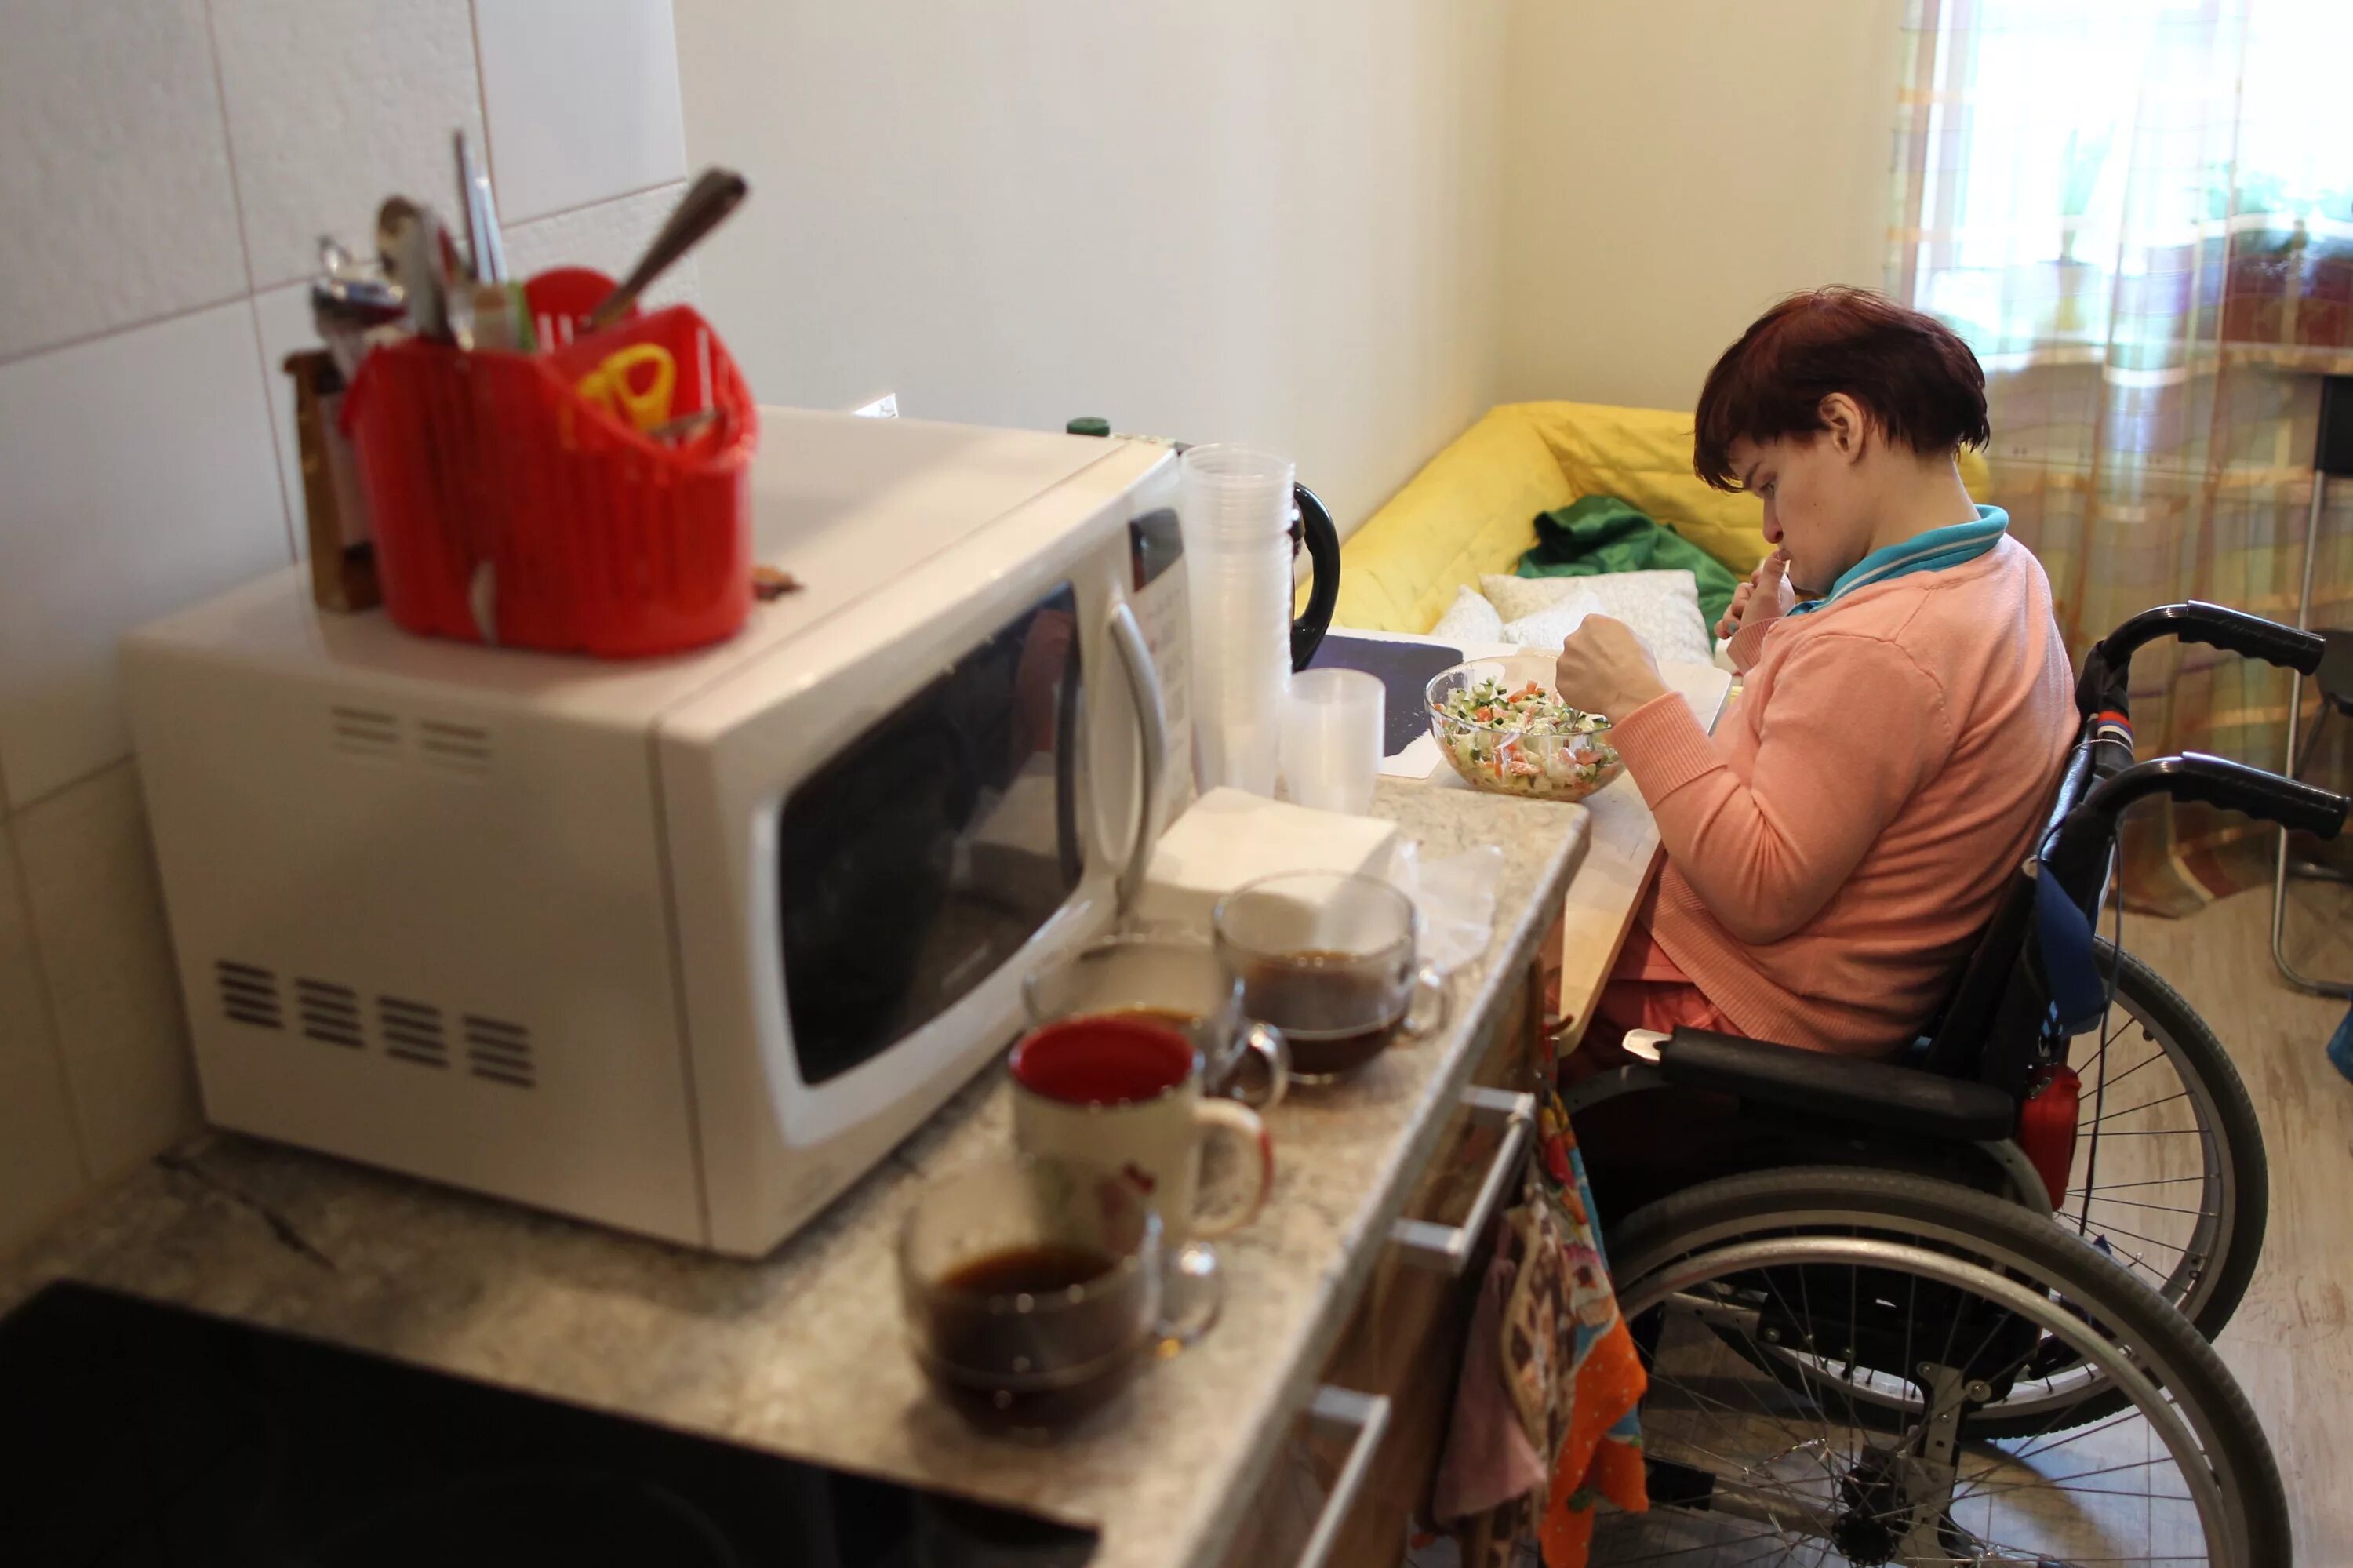 Инвалид детства квартира. Кухня для инвалидов. Кухня для инвалида колясочника. Квартира для инвалида. Ребенок инвалид на кухне.